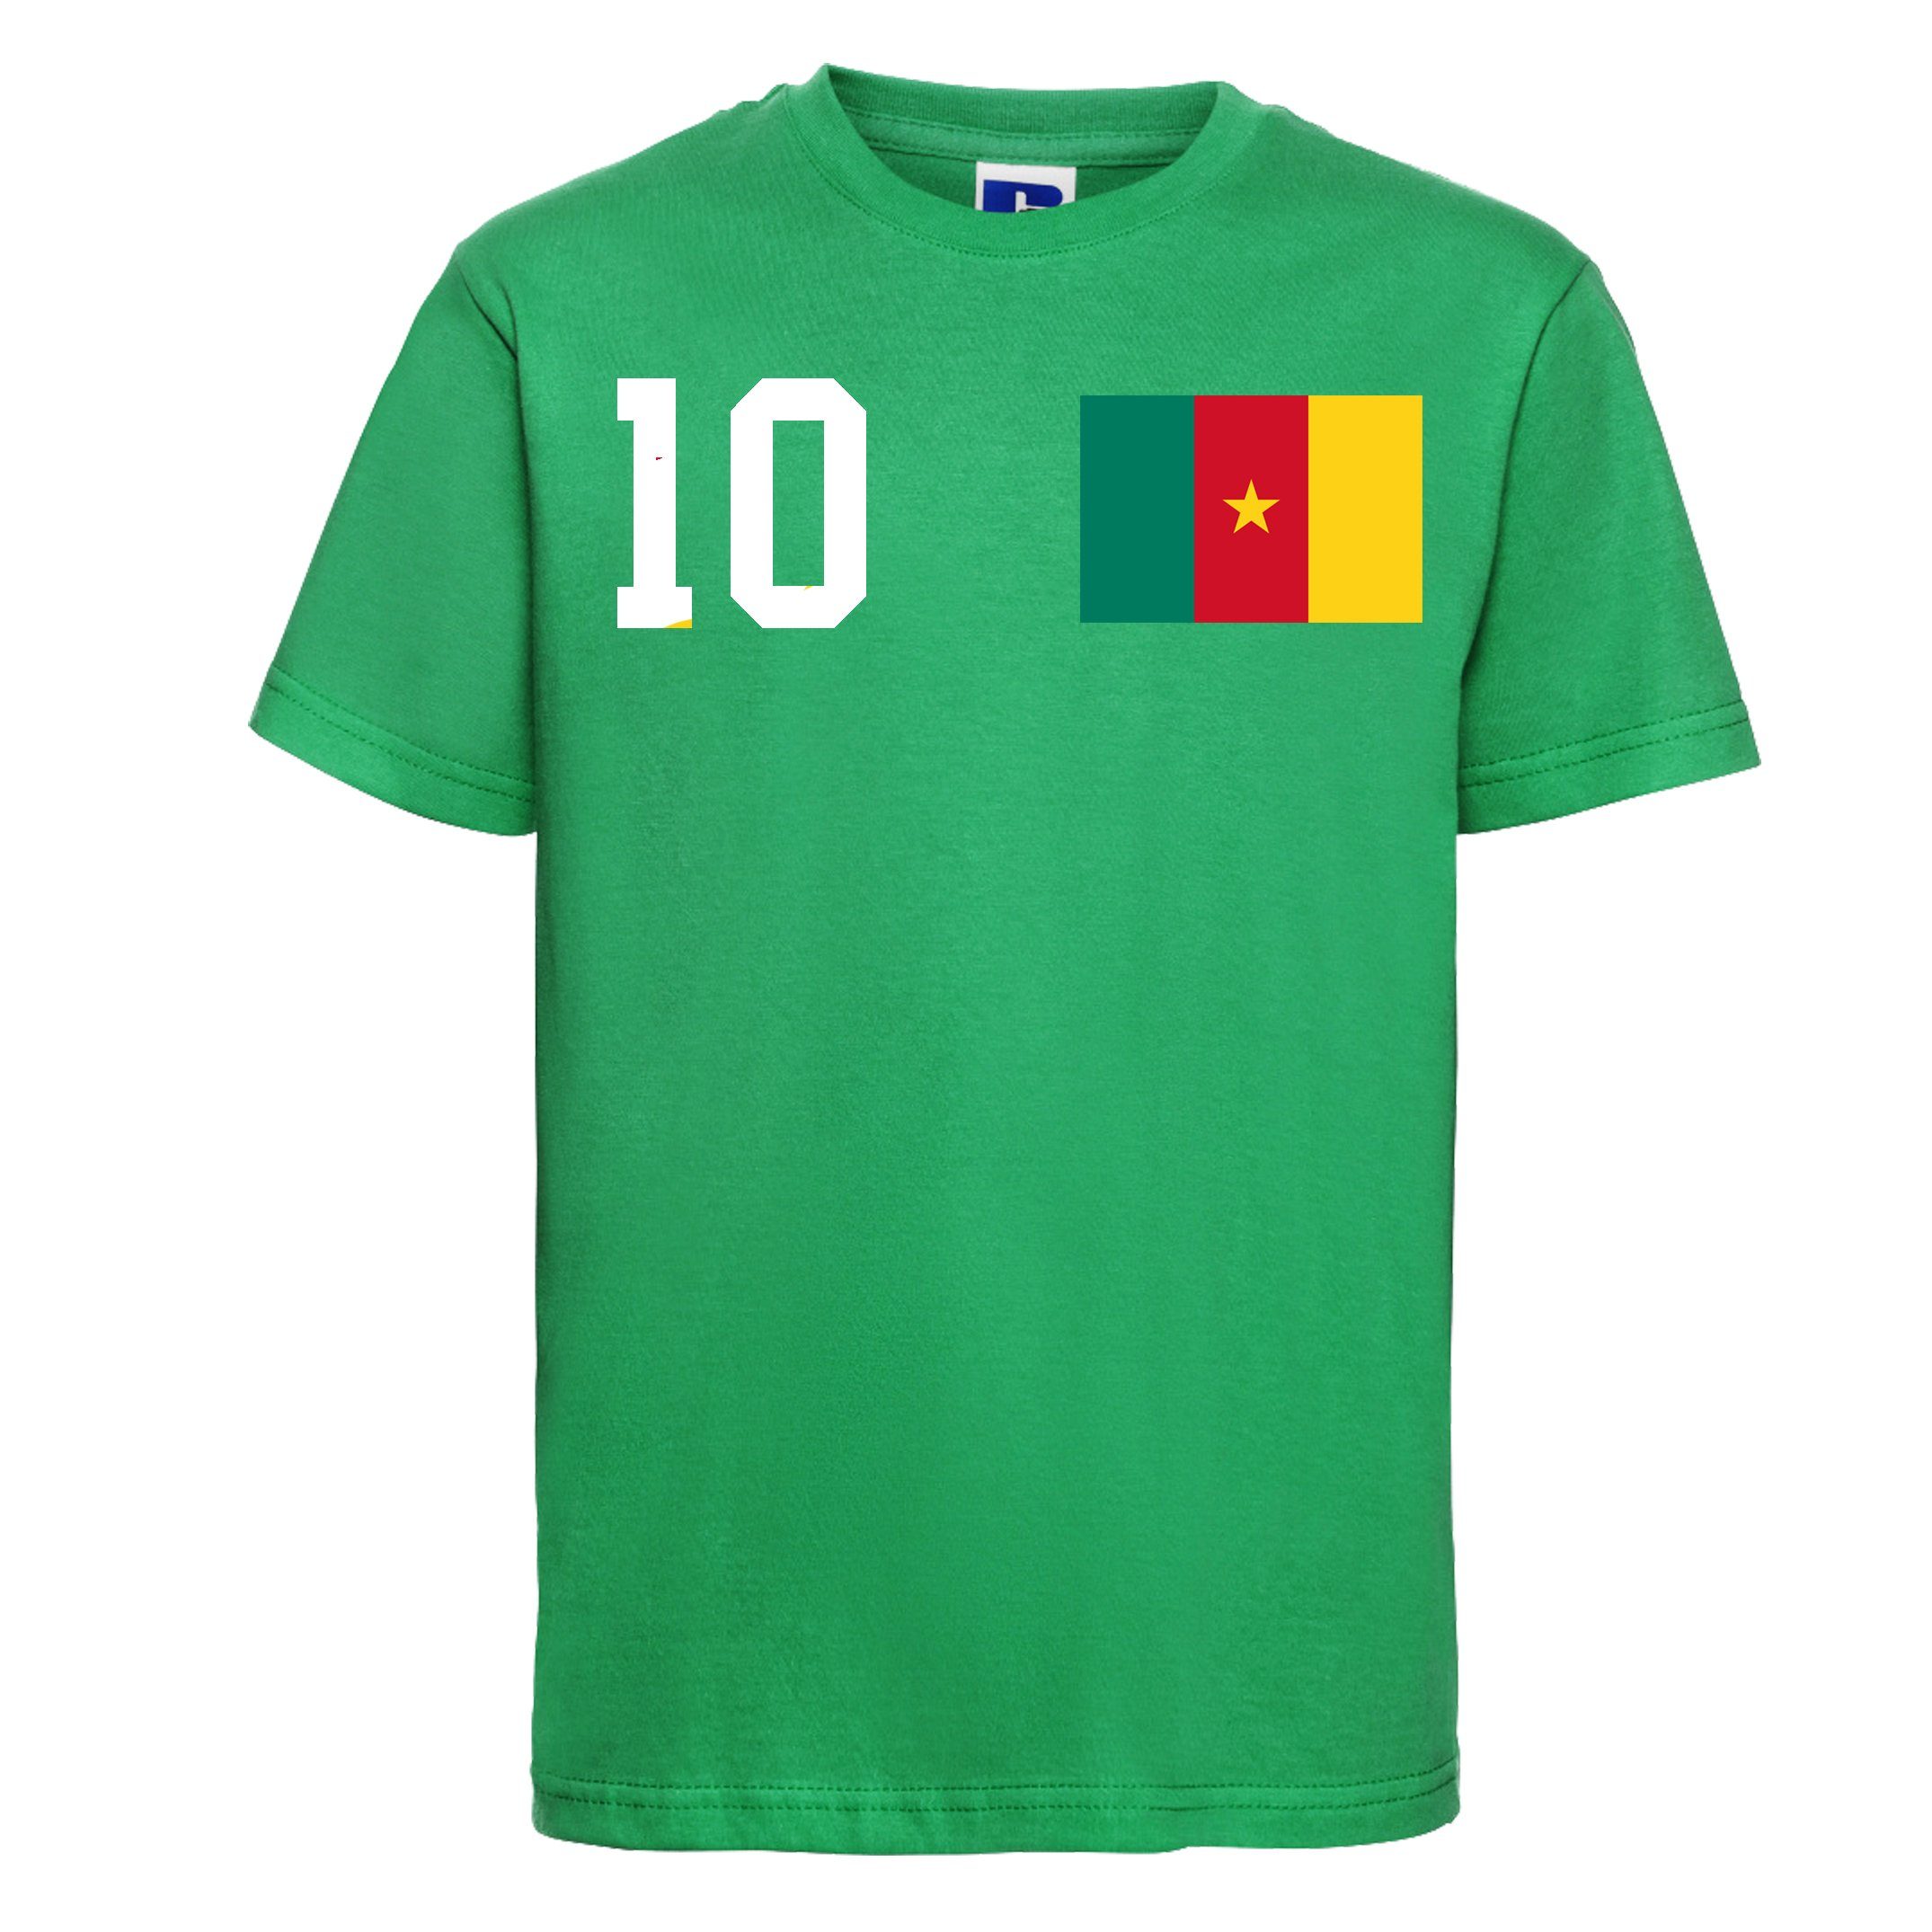 Shirt T-Shirt Kinder Motiv Kamerun trendigem Designz mit Look Youth Fußball im Trikot